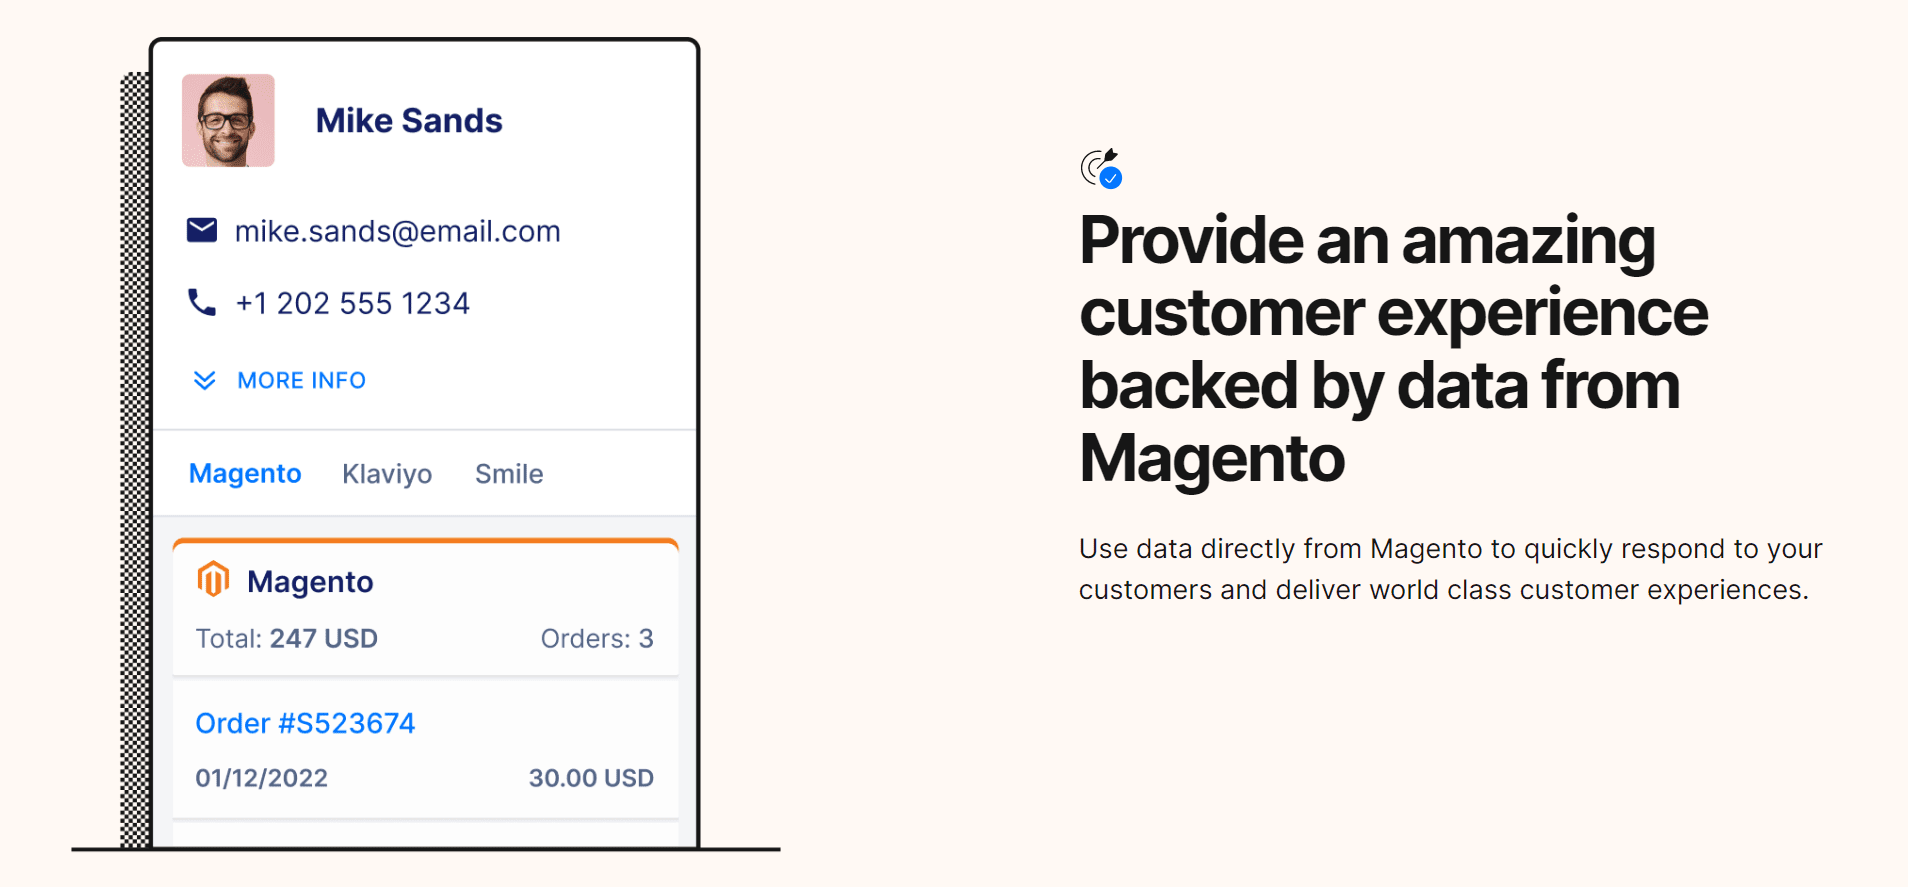 Gorgias Magento Helpdesk support chat system